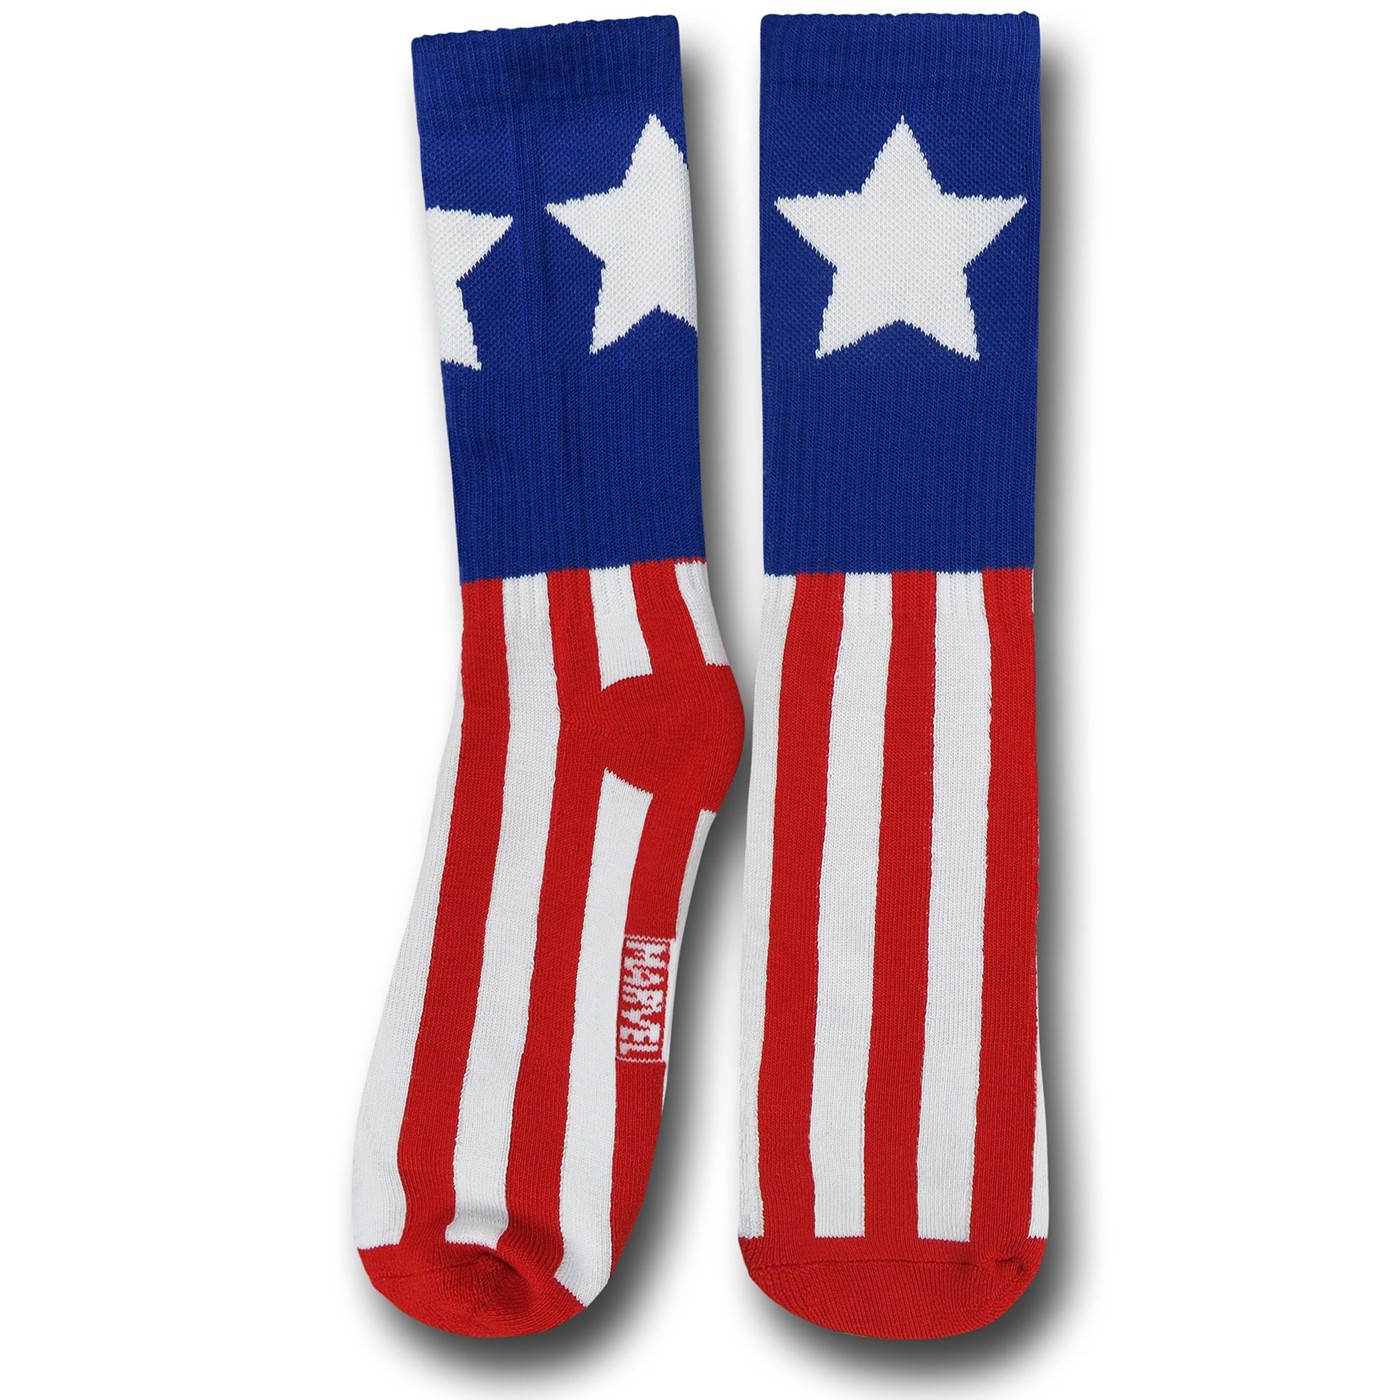 Captain America Athletic Socks 2-Pack